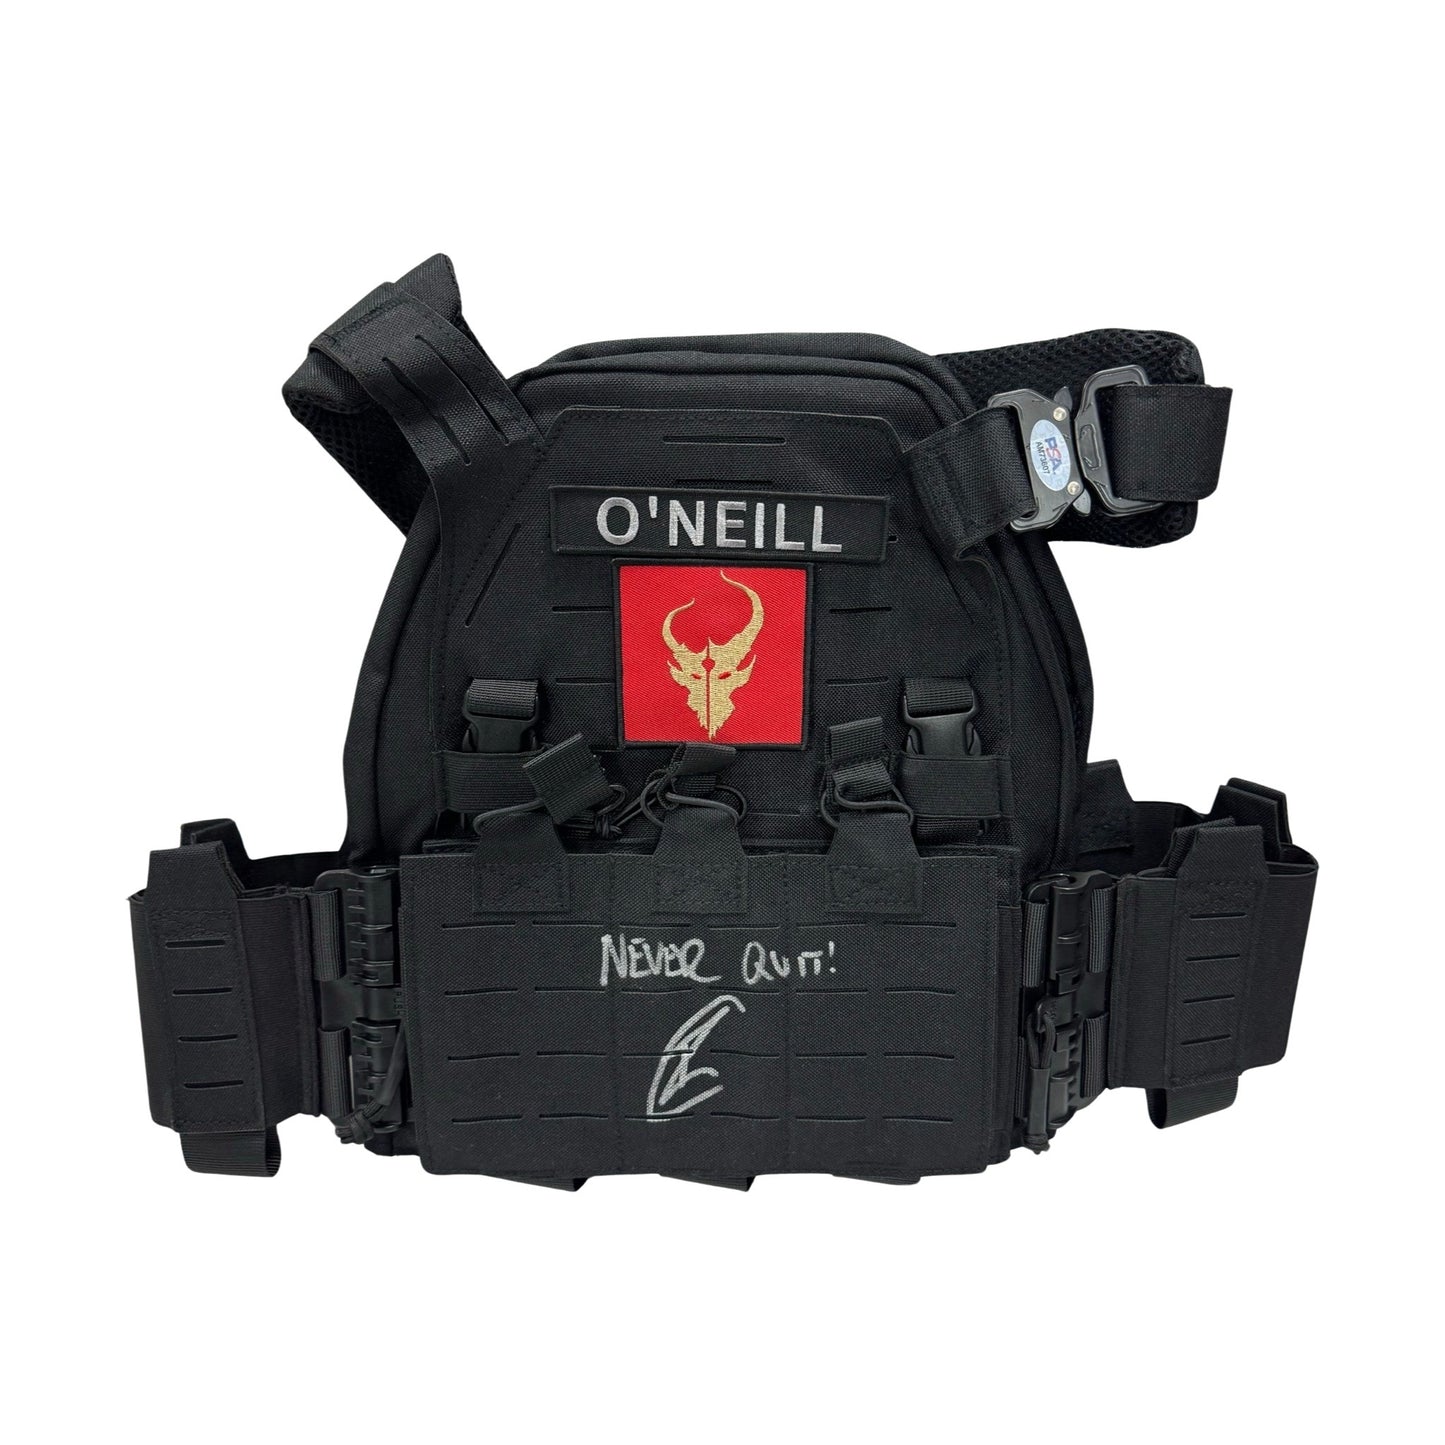 Robert O’Neill Autographed Navy Seal US Military Tactical Vest “Never Quit!” Inscription PSA